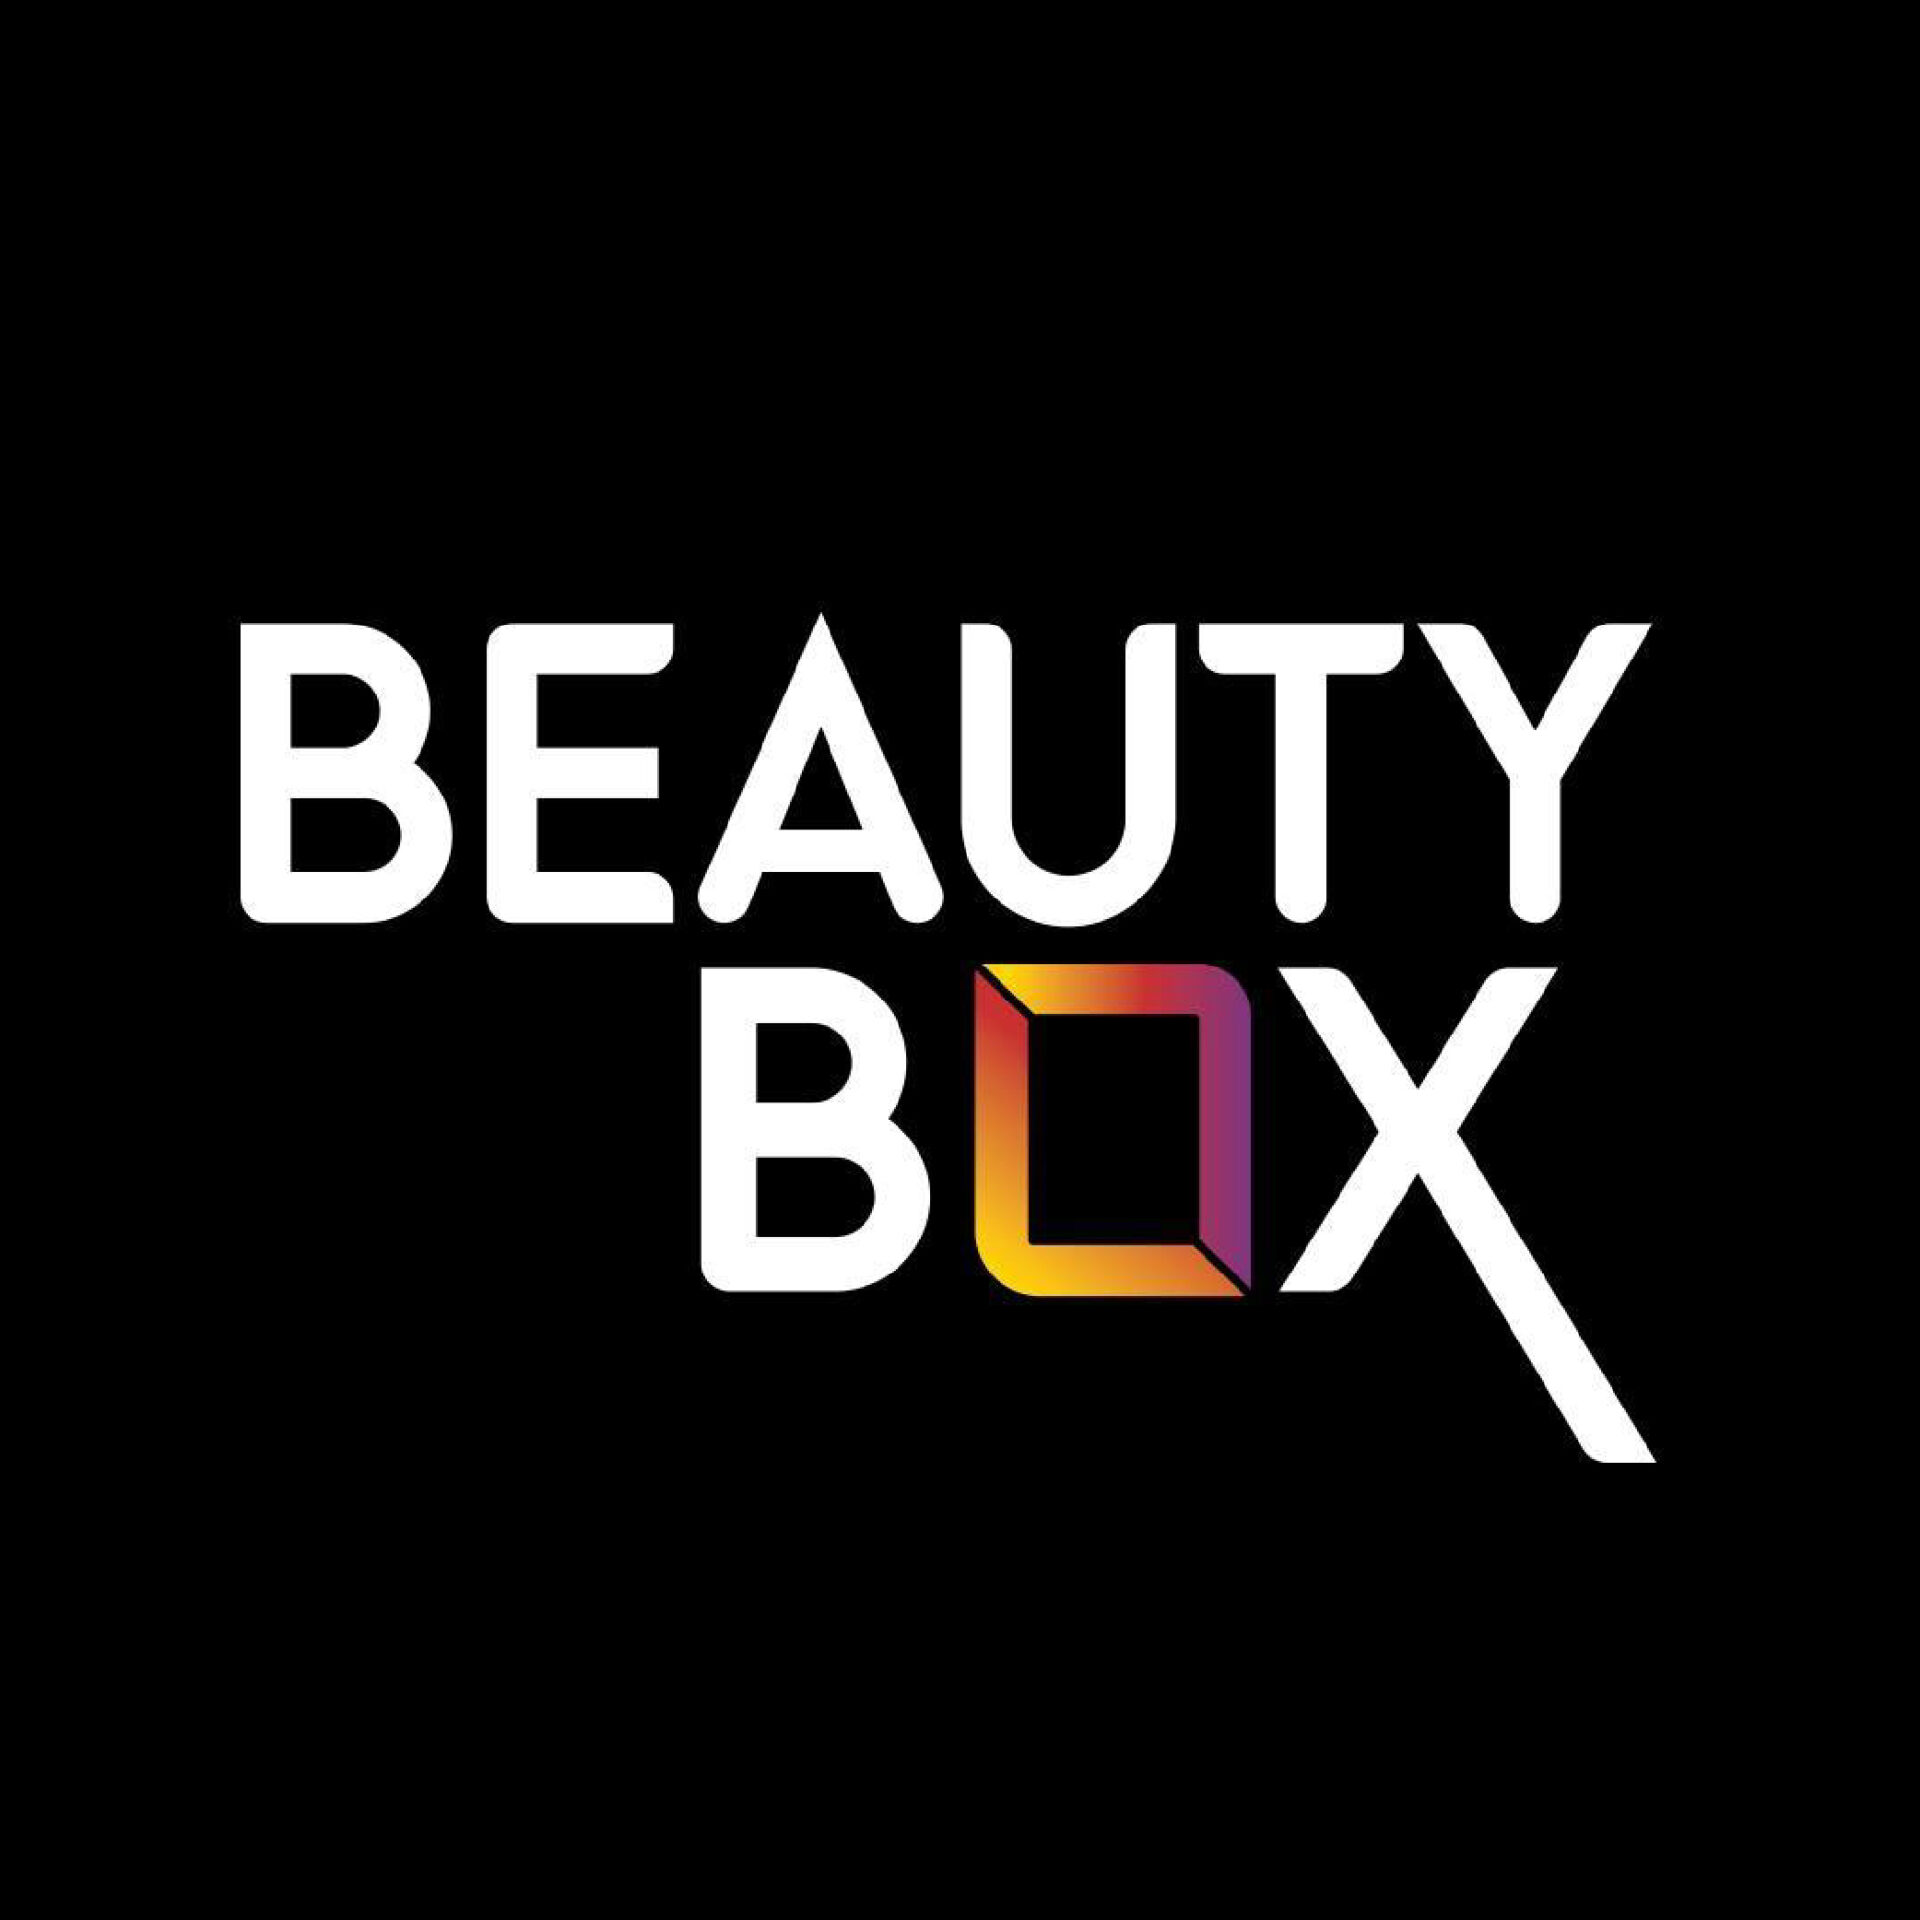 Beauty Box logo scaled